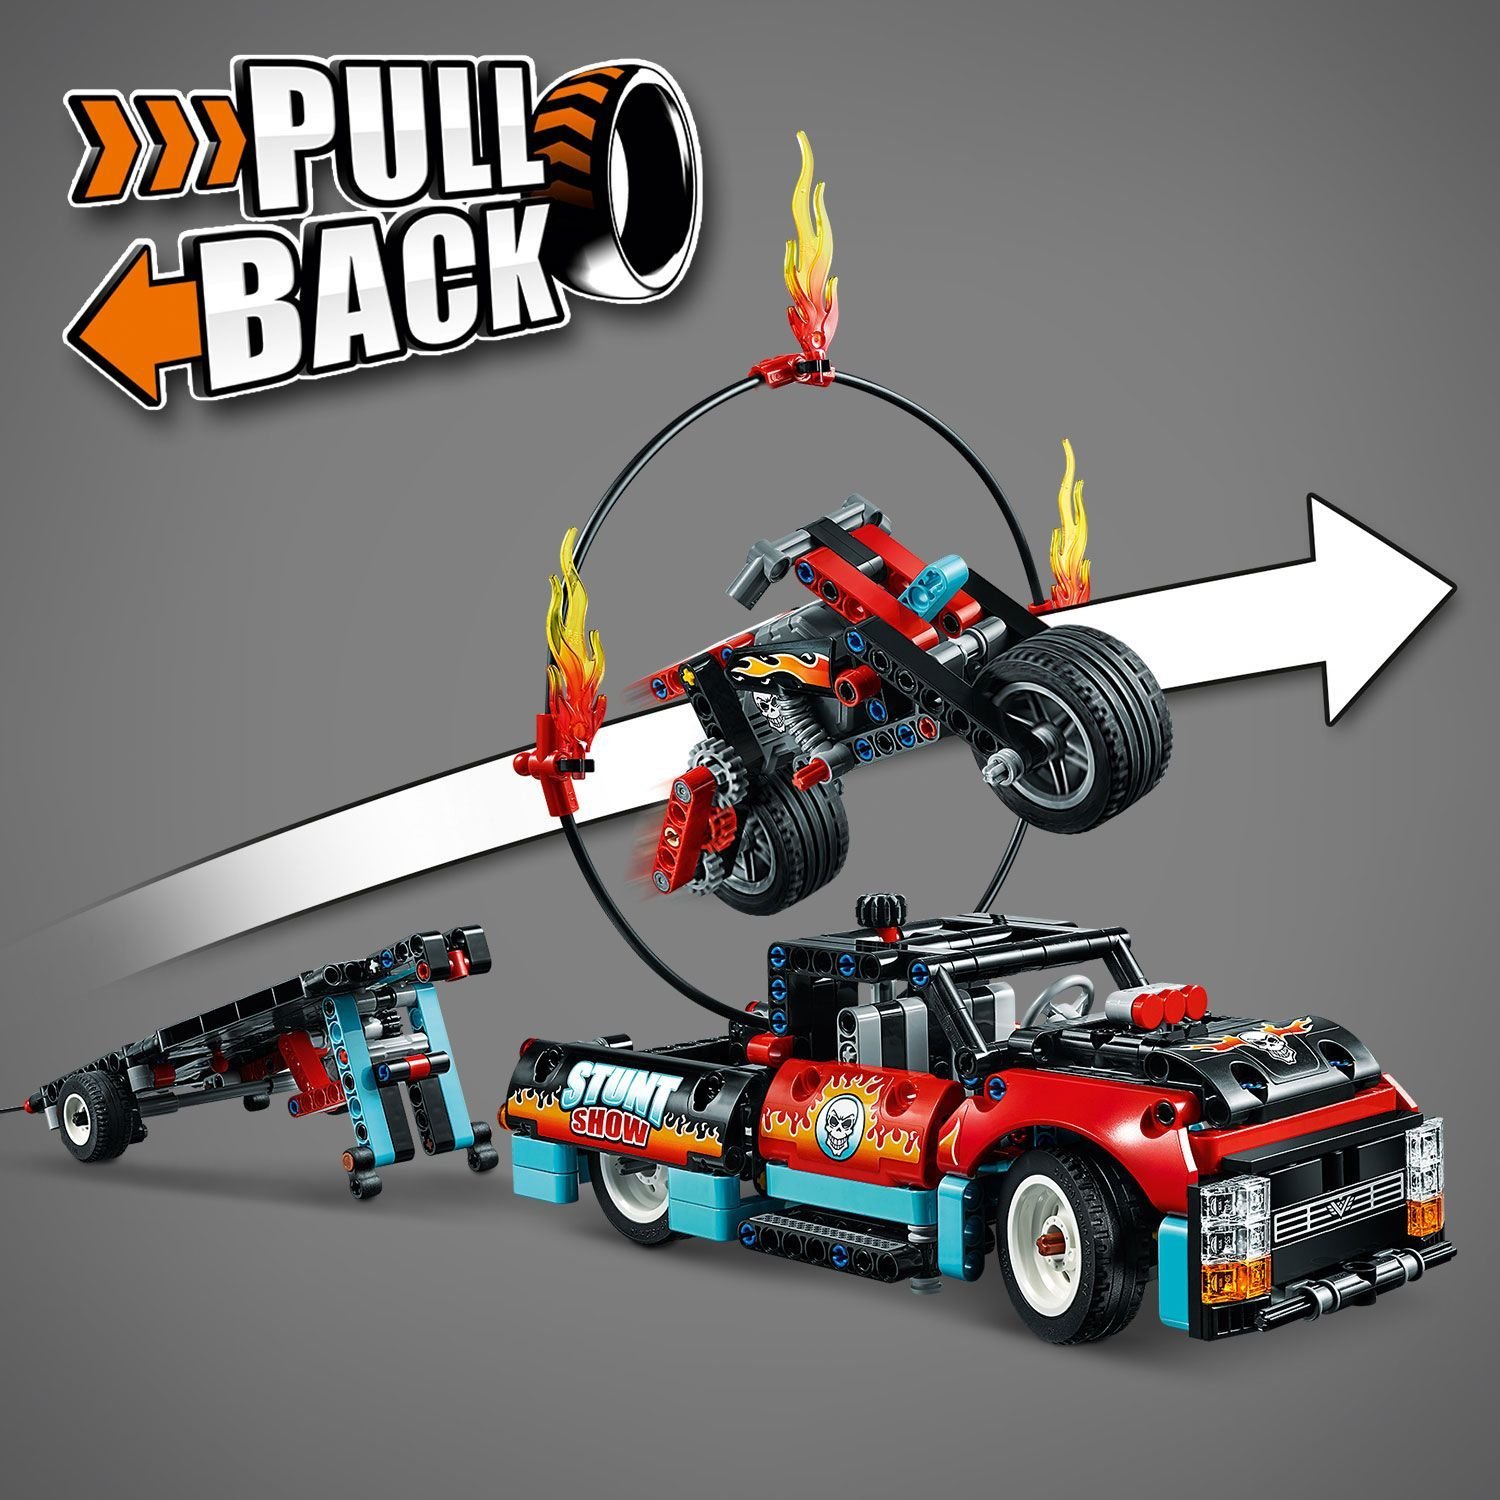 Конструктор LEGO Technic 42106 Шоу трюков на грузовиках и мотоциклах